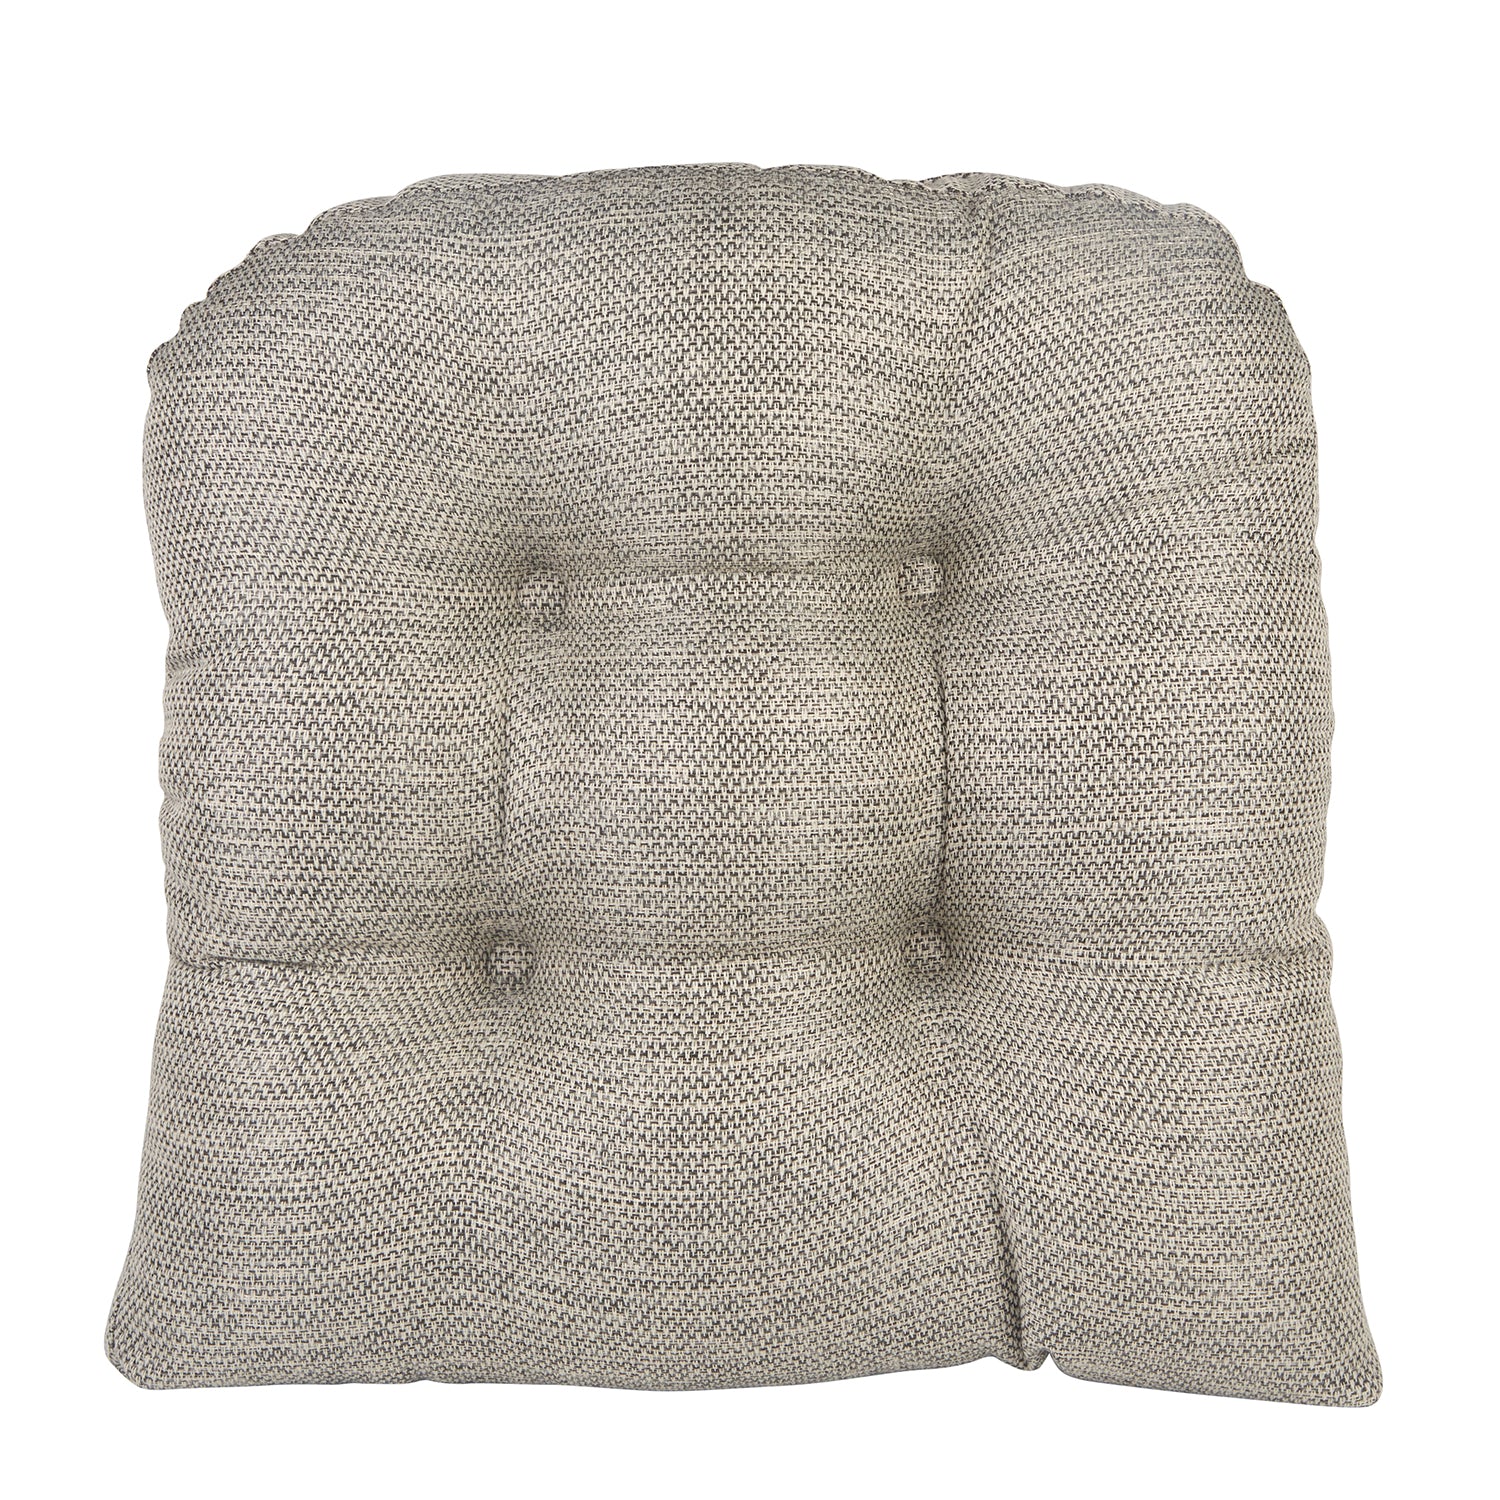 Achim Buffalo Check Tufted Chair Seat Cushions - Set of 2 - Burgundy Grey